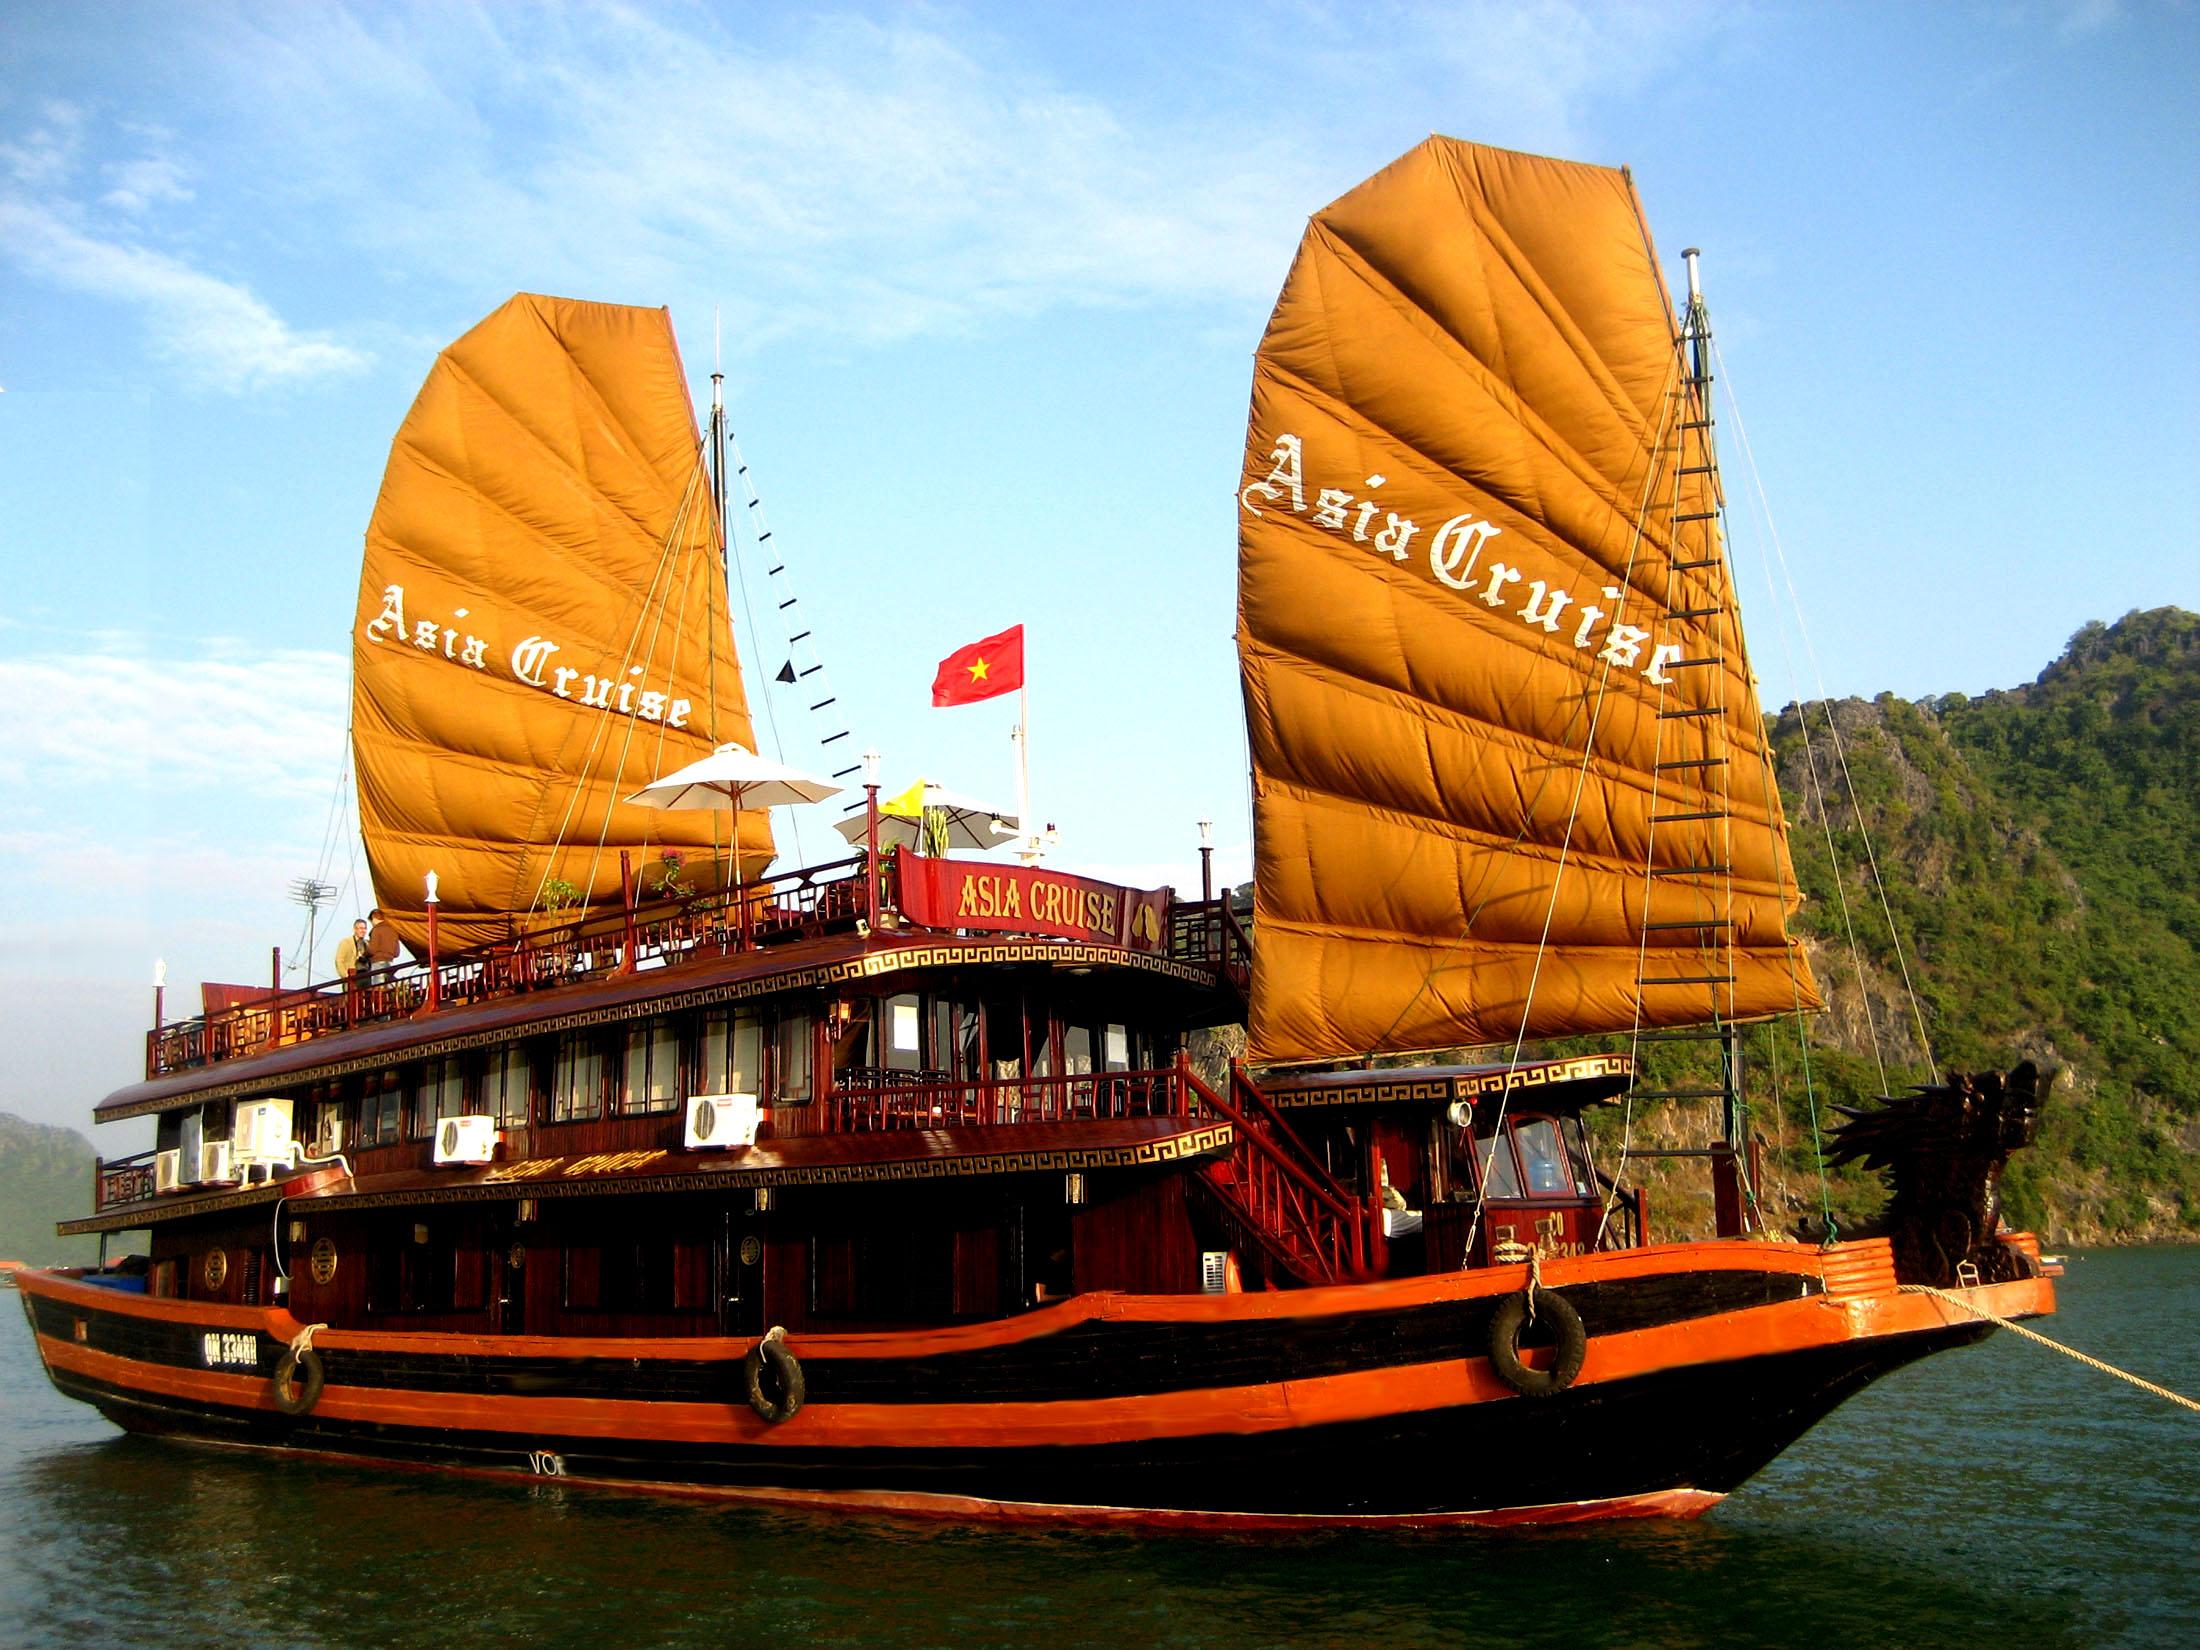 File:Asia cruise in Halong bay Vietnam.JPG